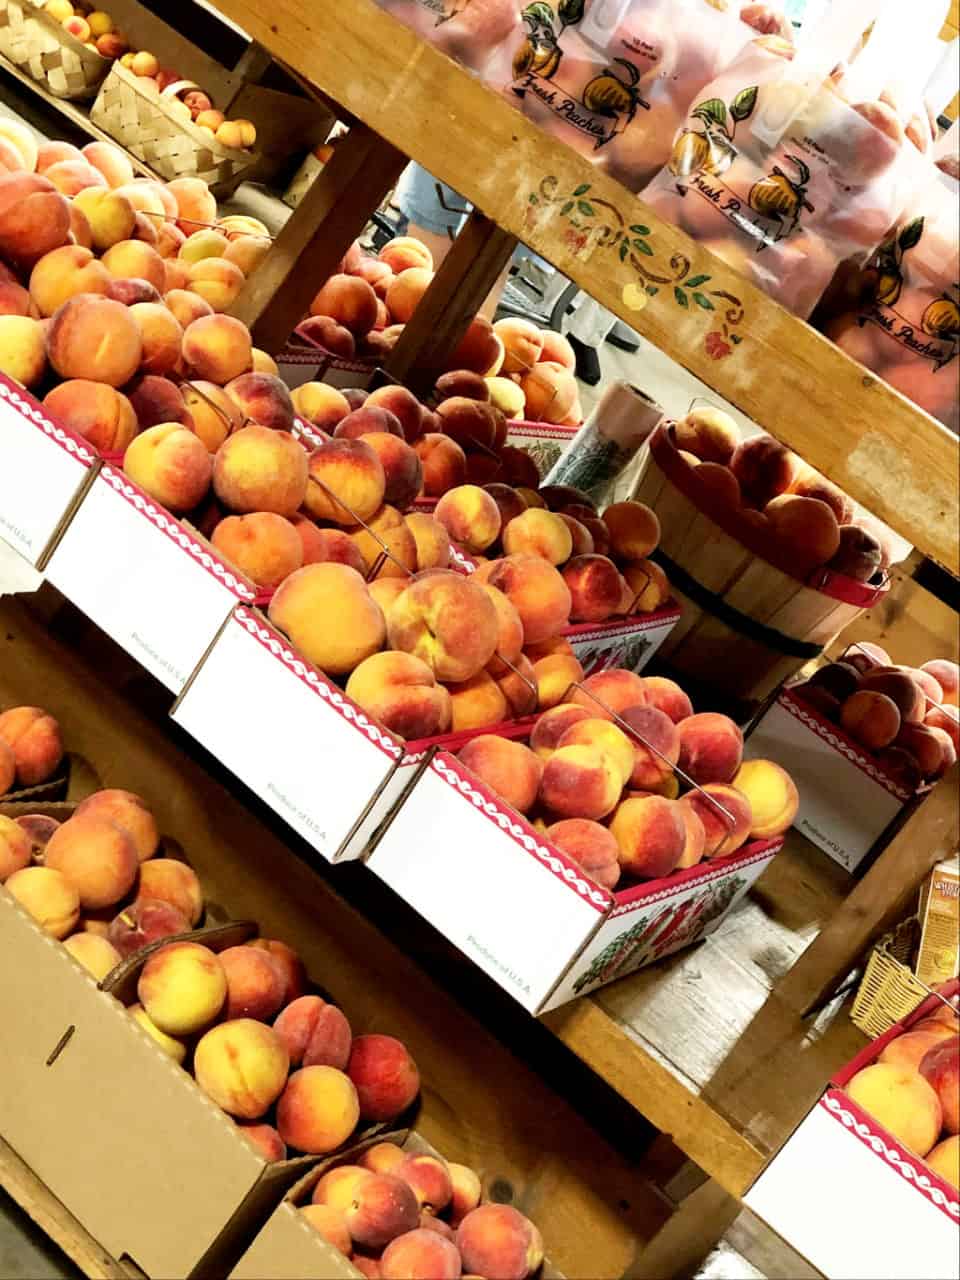 Sweet Georgia Peaches grown at Mercier Orchards in Blue Ridge, Georgia